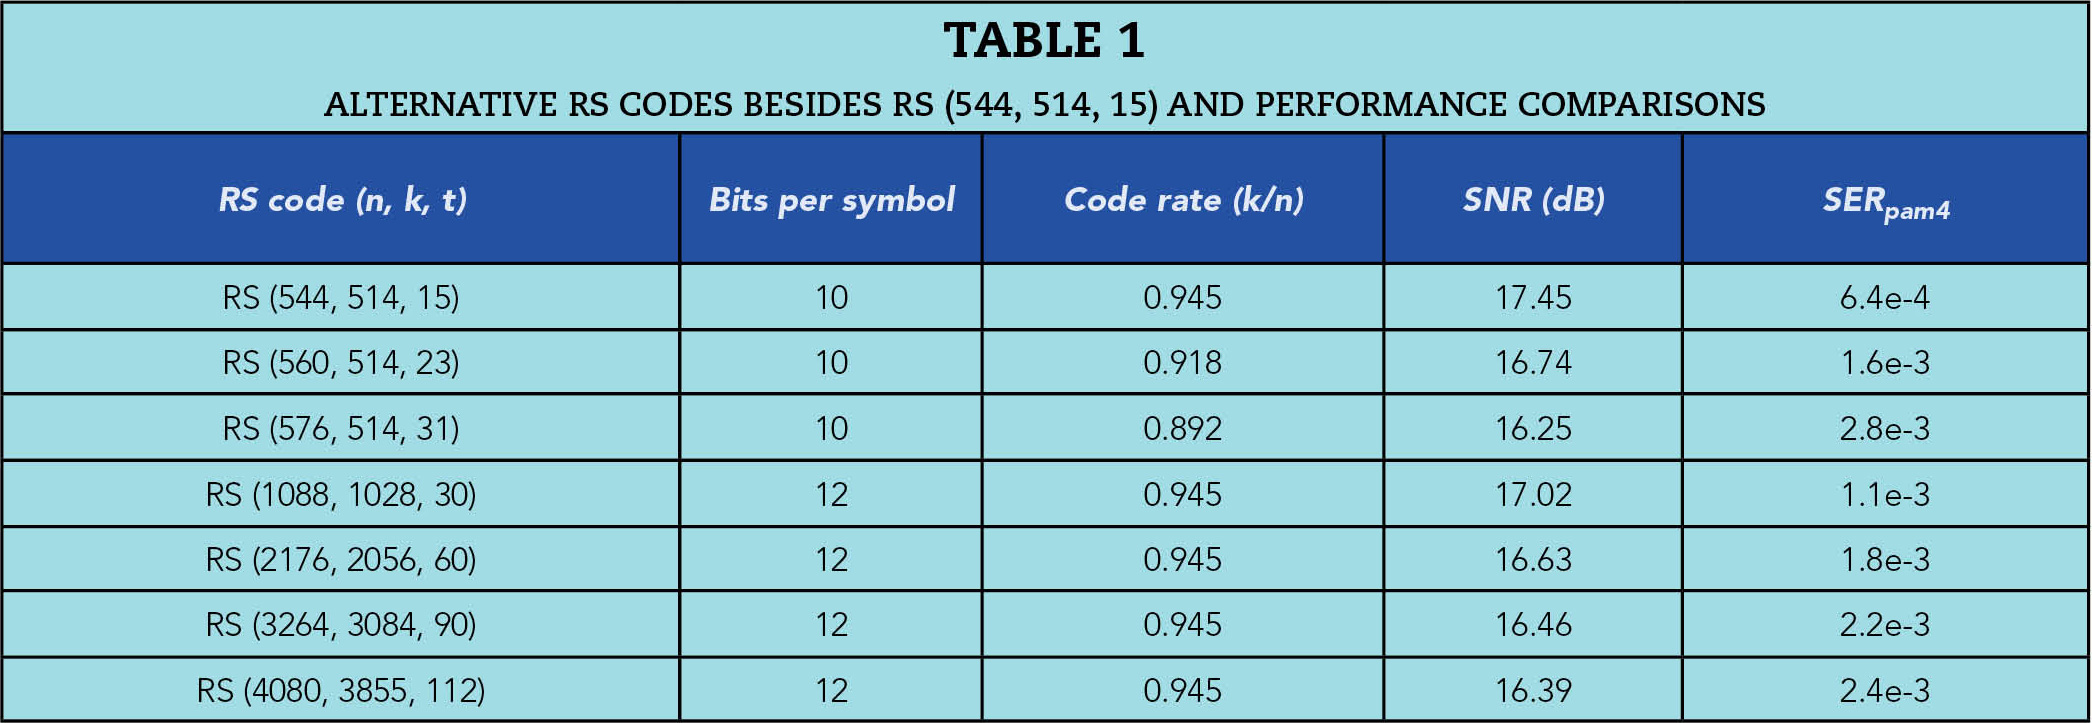 TABLE-1.jpg